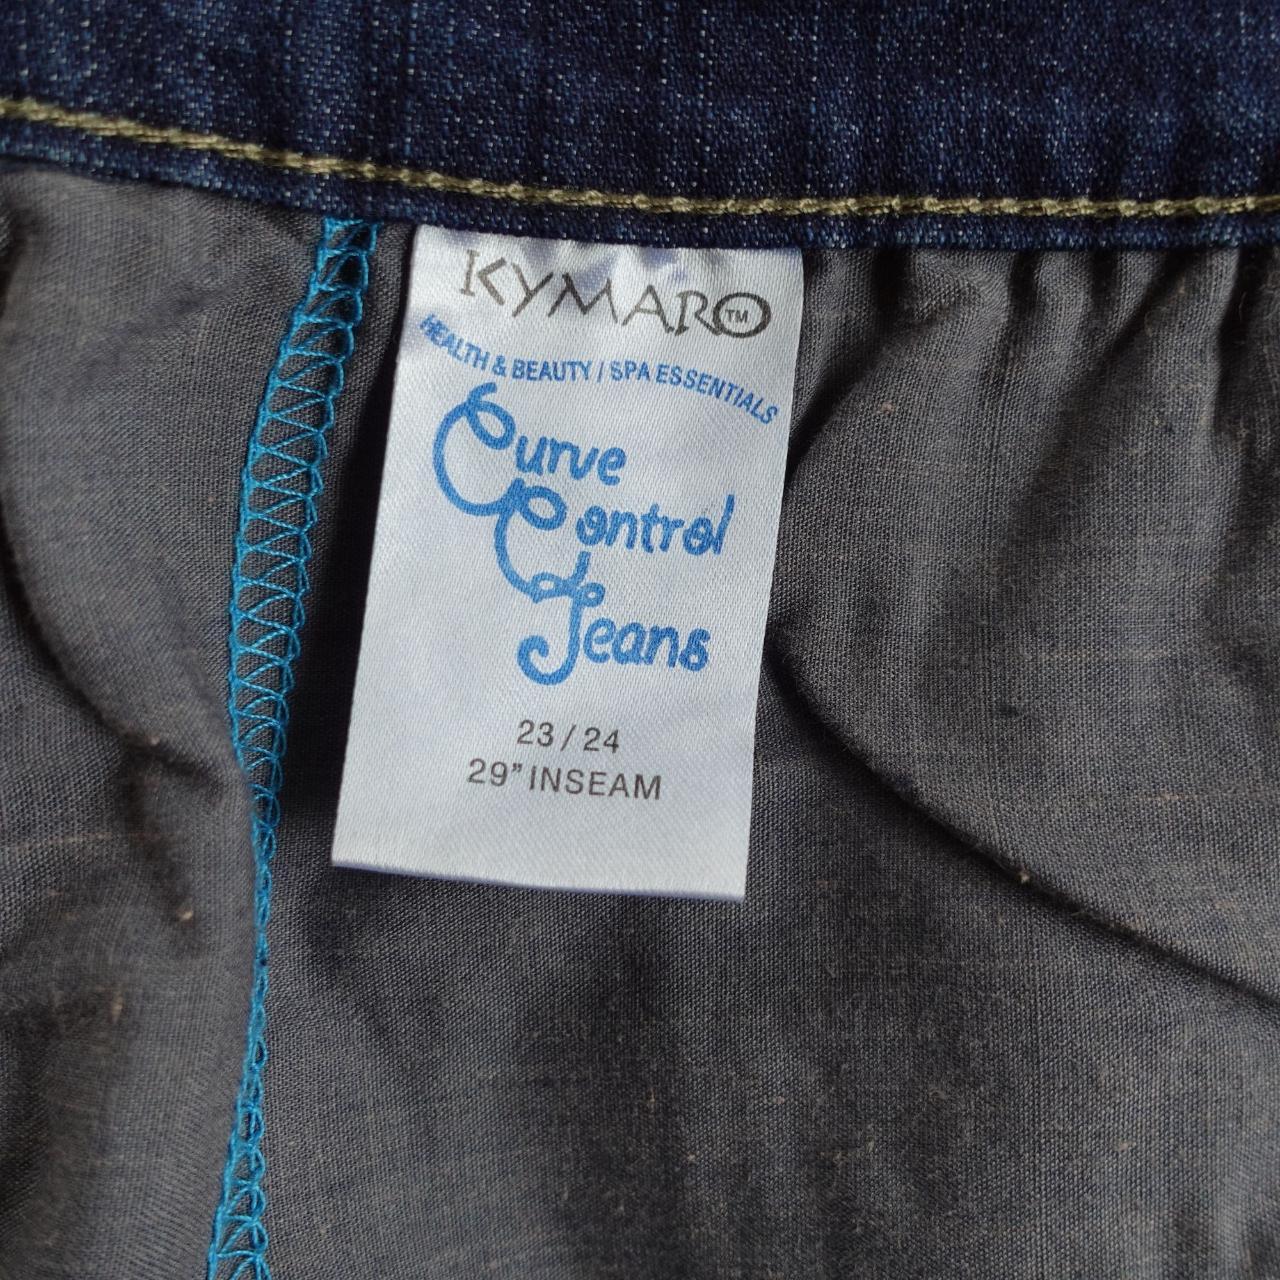 Kymaro PLUS Curve Control Jeans Straight Leg High - Depop